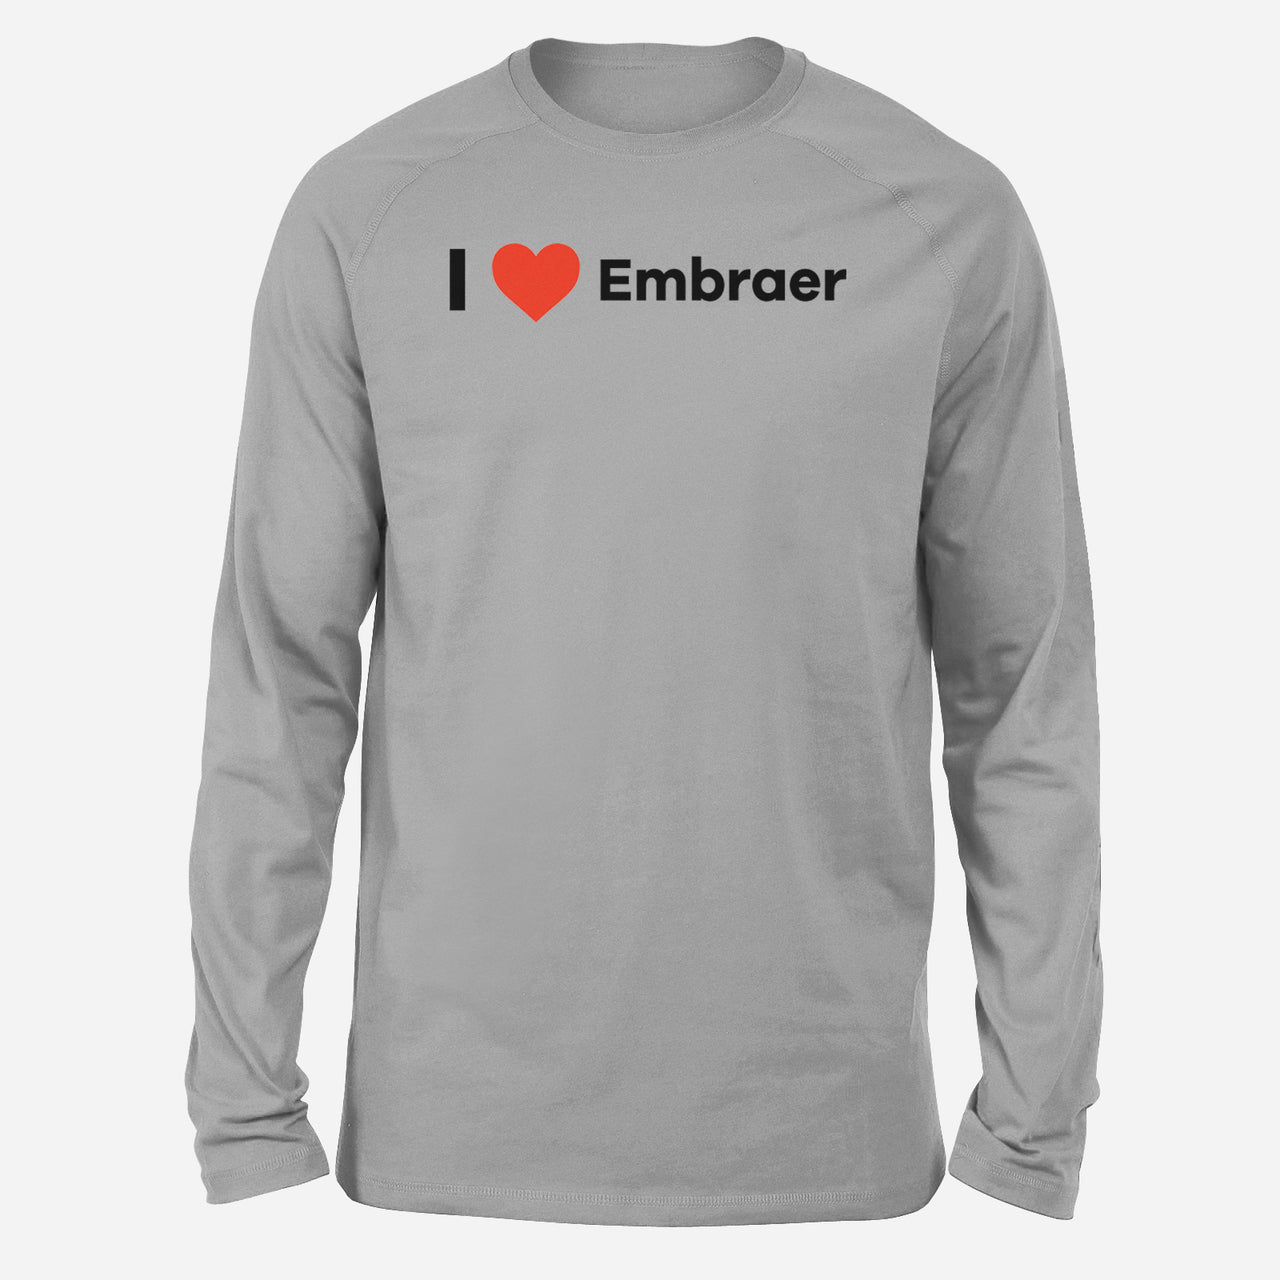 I Love Embraer Designed Long-Sleeve T-Shirts